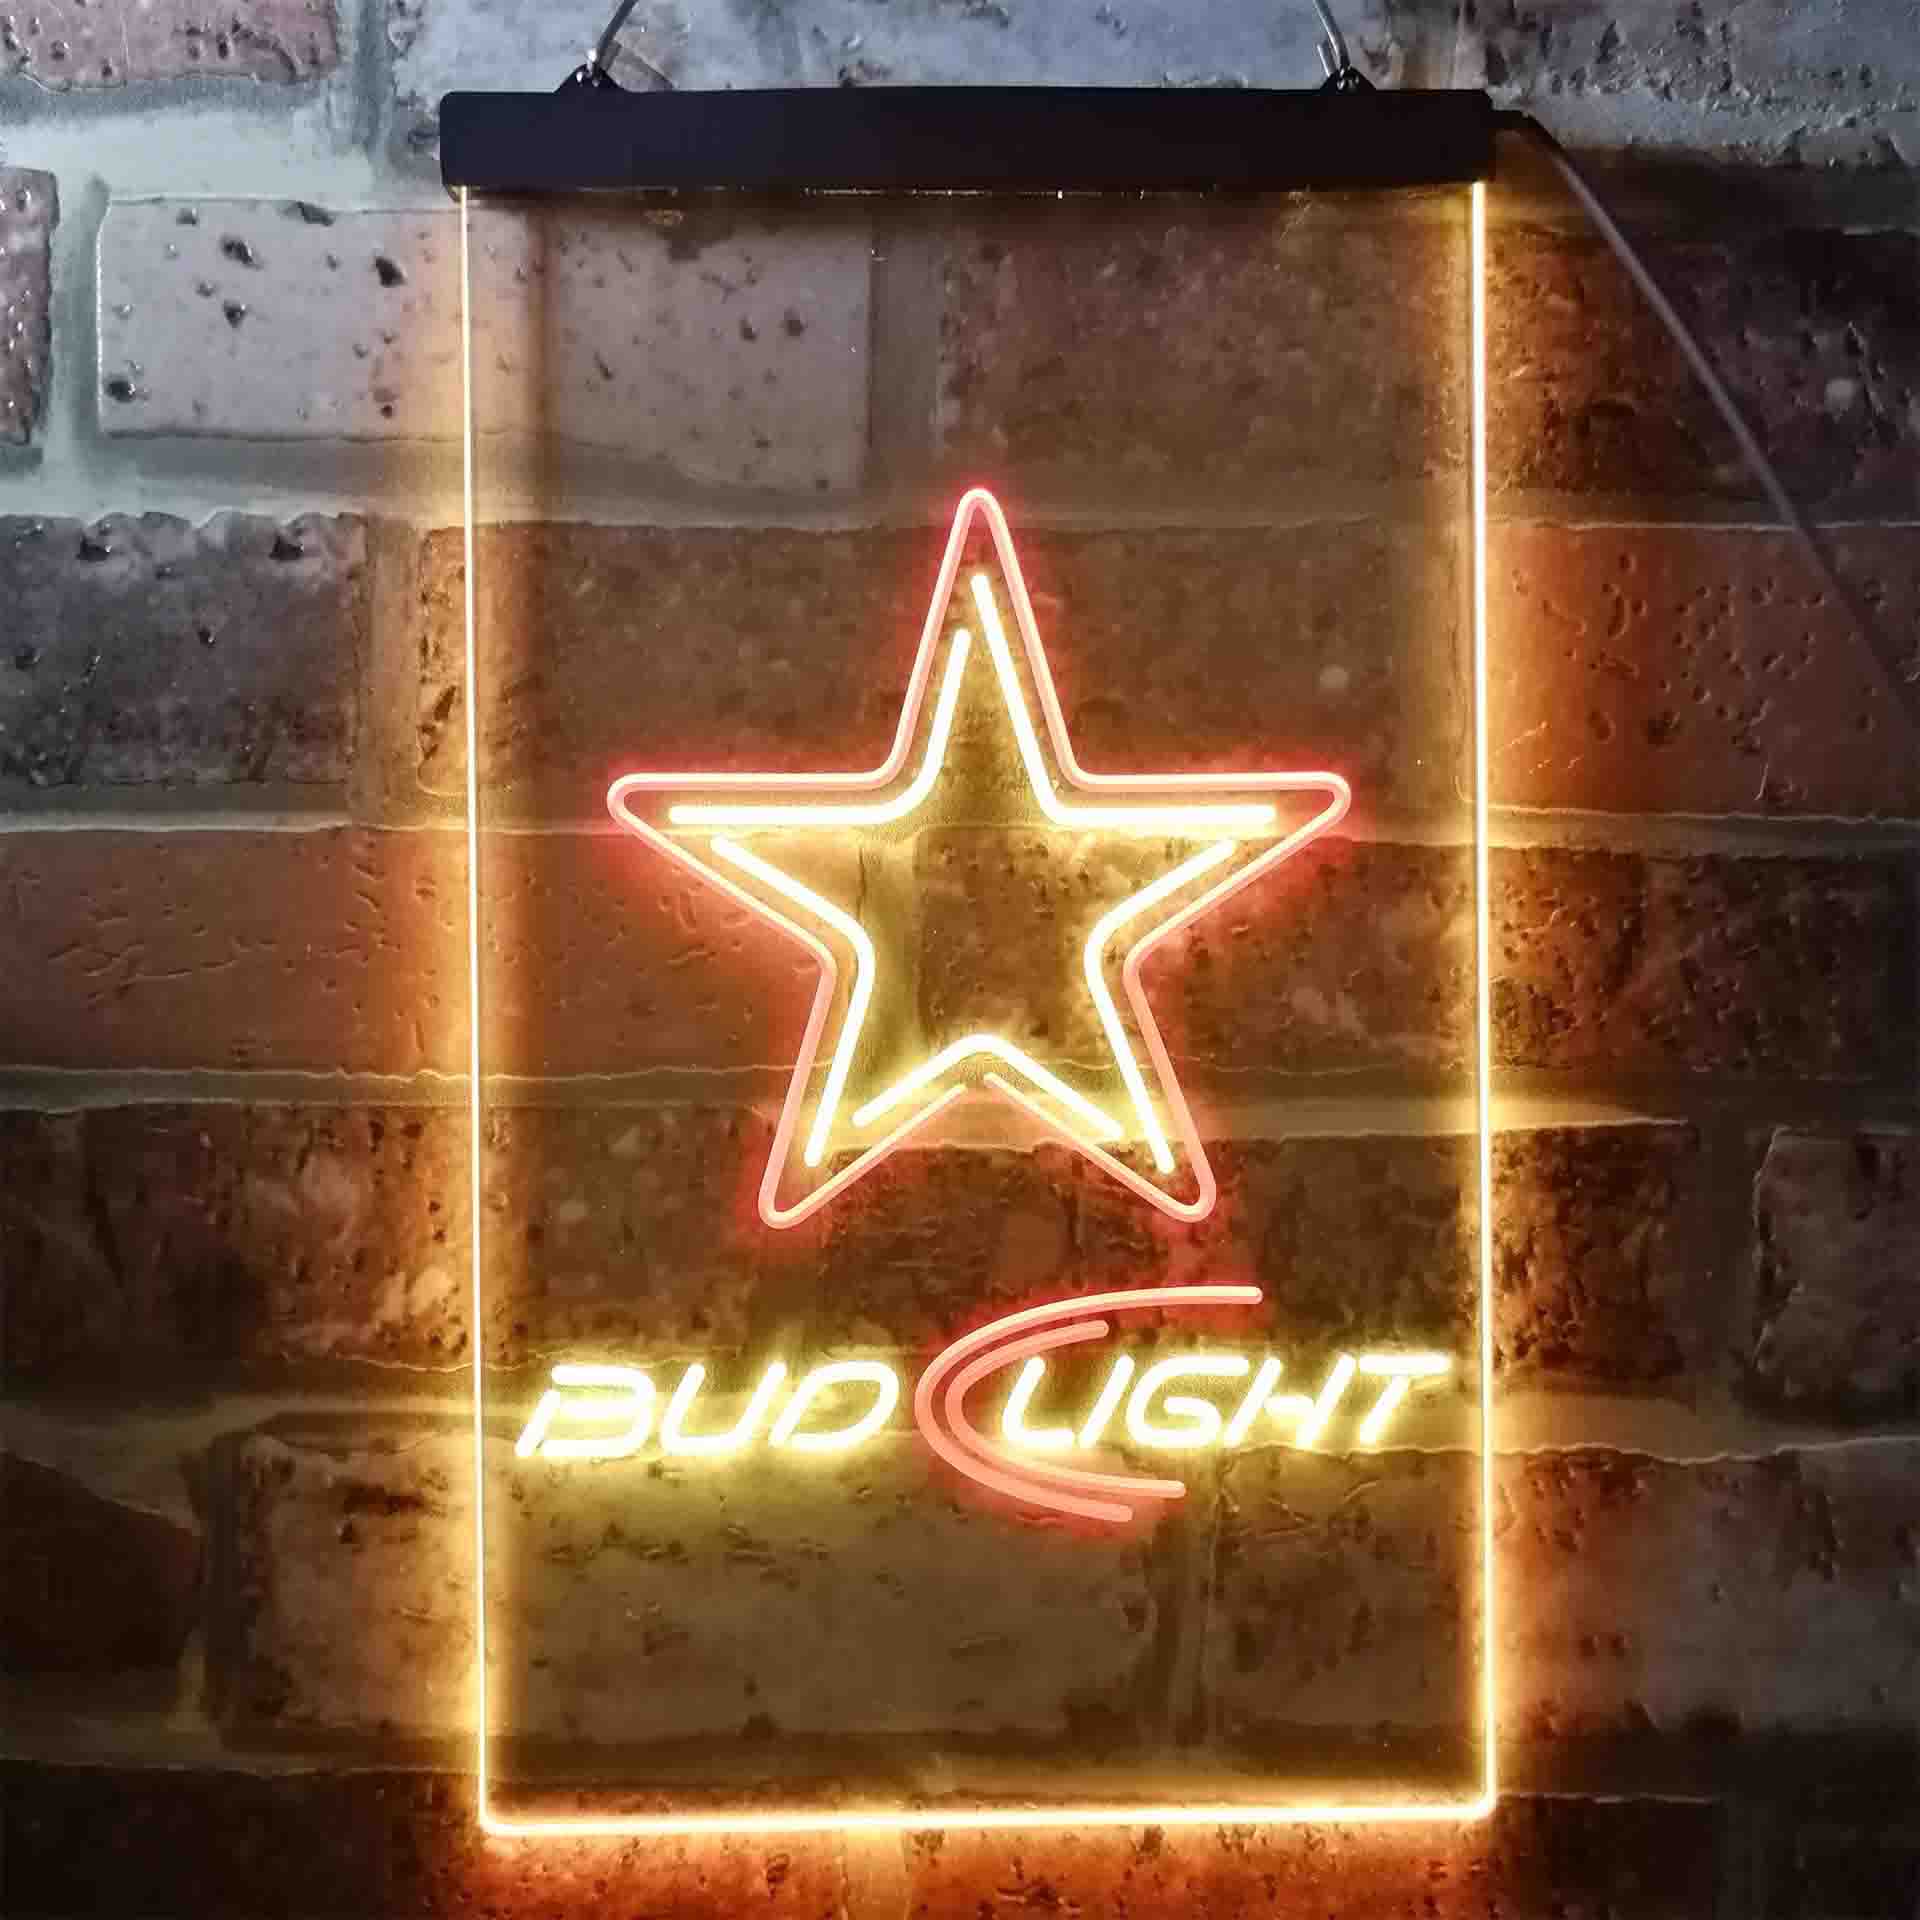 Bud Light Dallas Cowboys Neon LED Sign